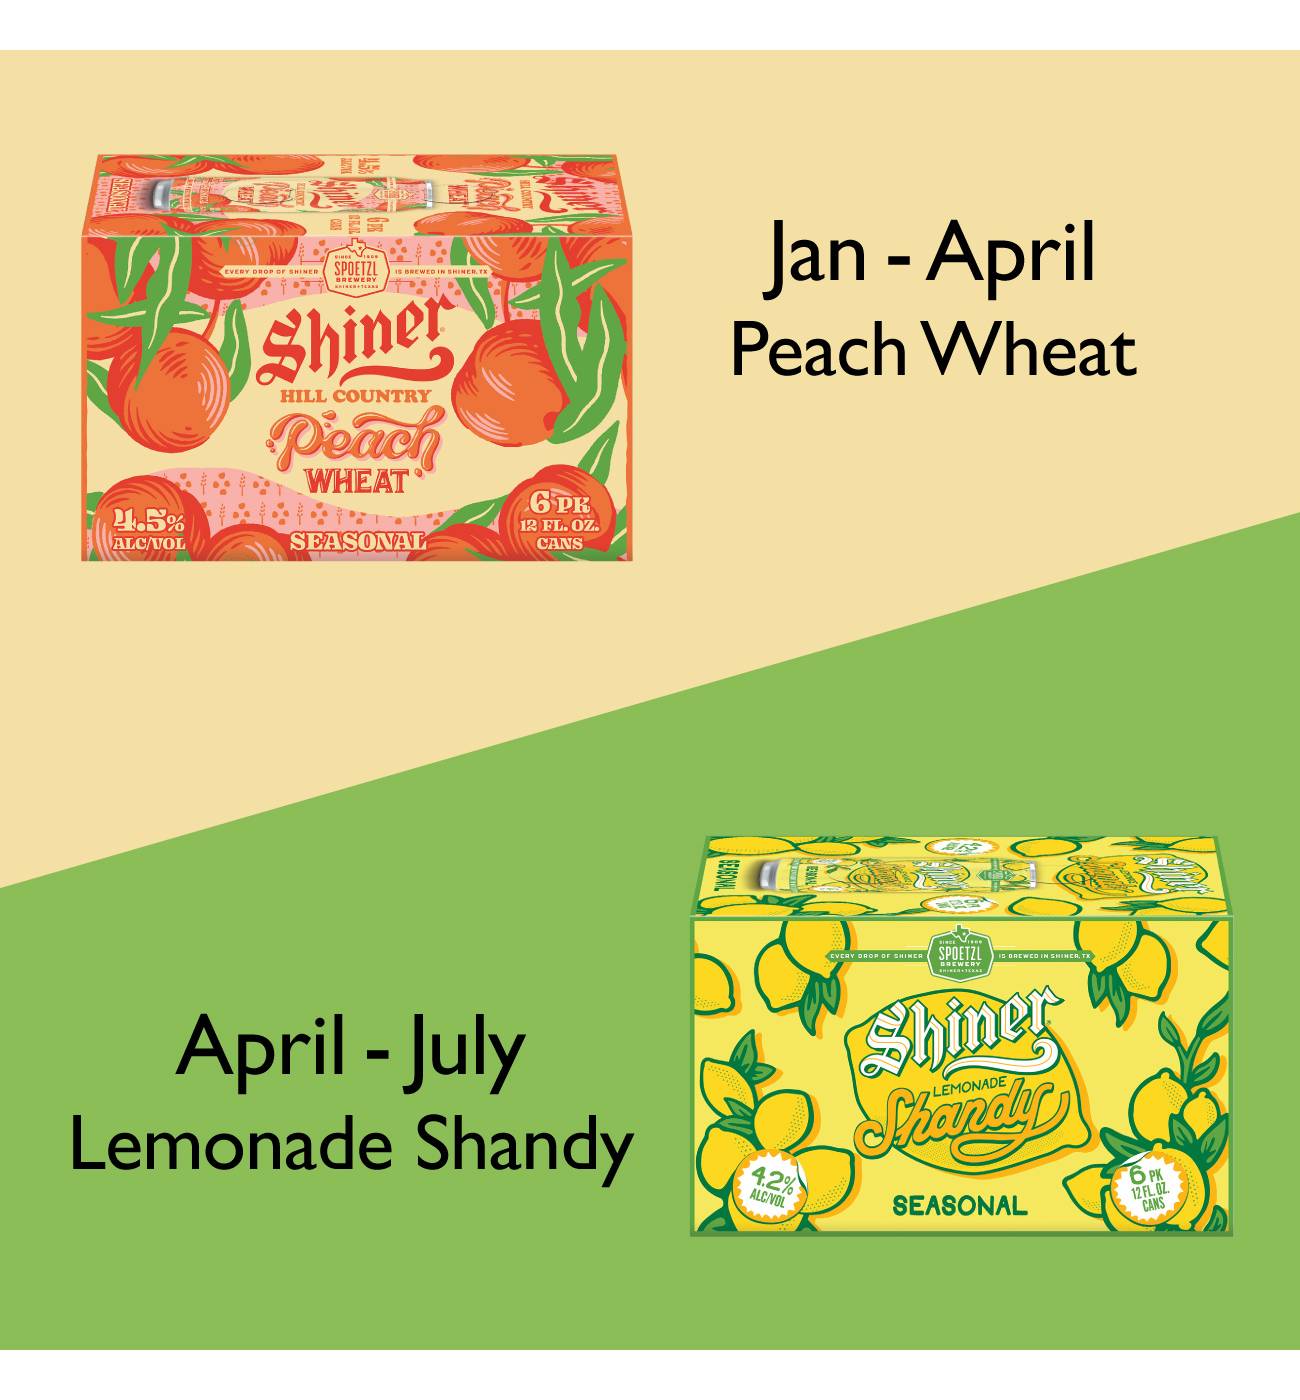 Shiner Seasonal Beer 12 pk Cans - Peach Wheat OR Lemonade Shandy; image 1 of 3